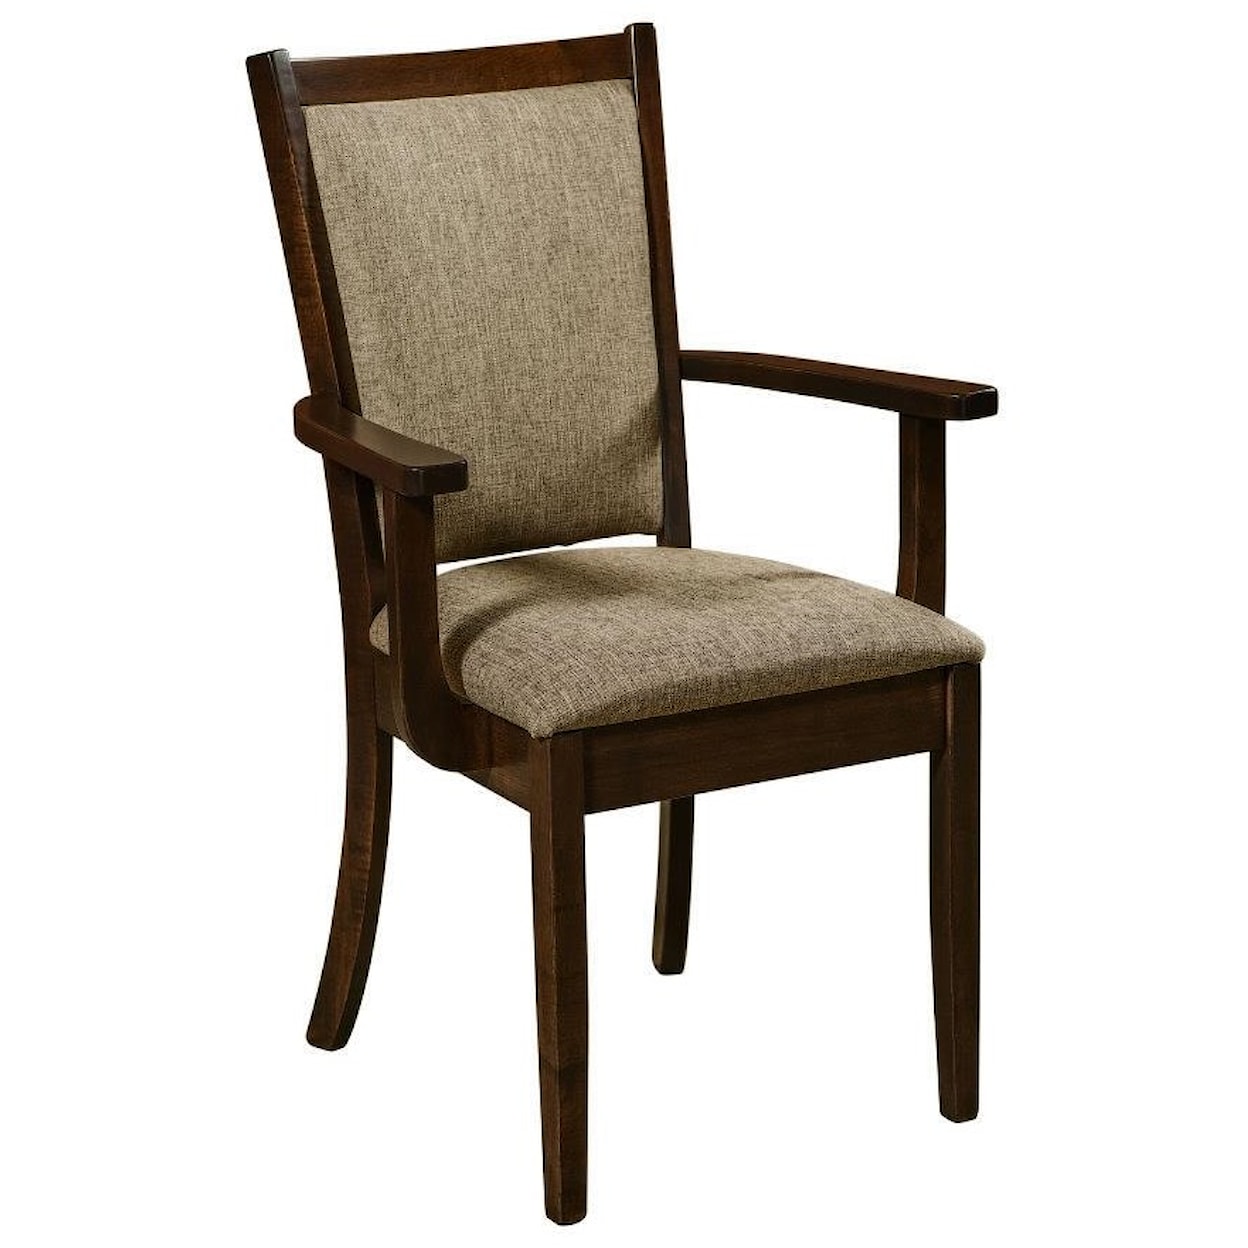 F&N Woodworking Kalispel Arm Chair